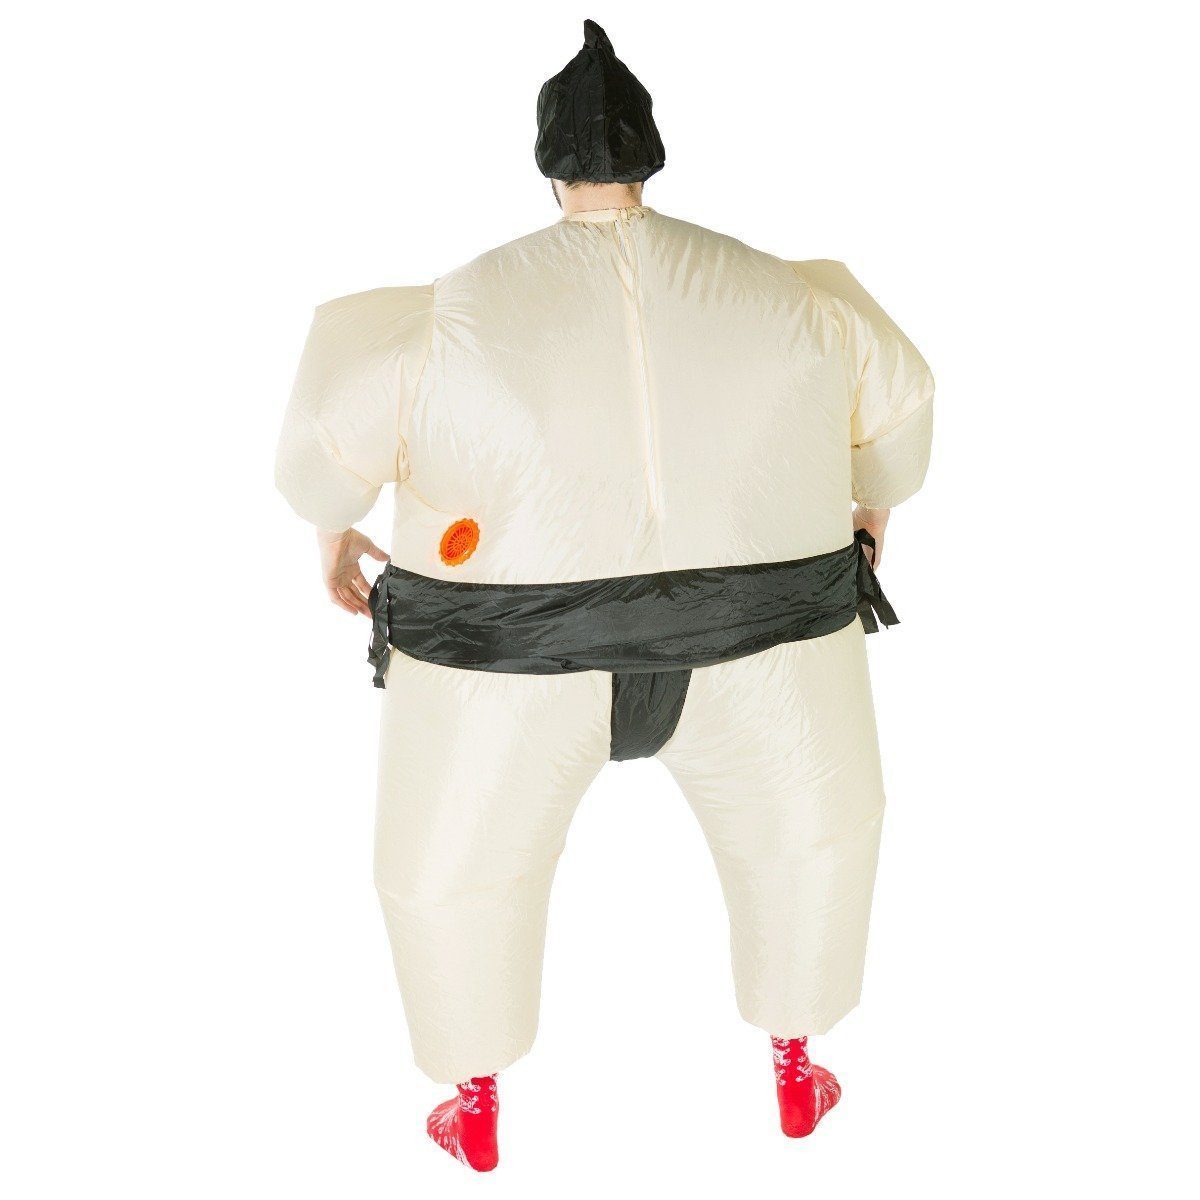 Fancy Dress - Inflatable Sumo Wrestler Costume